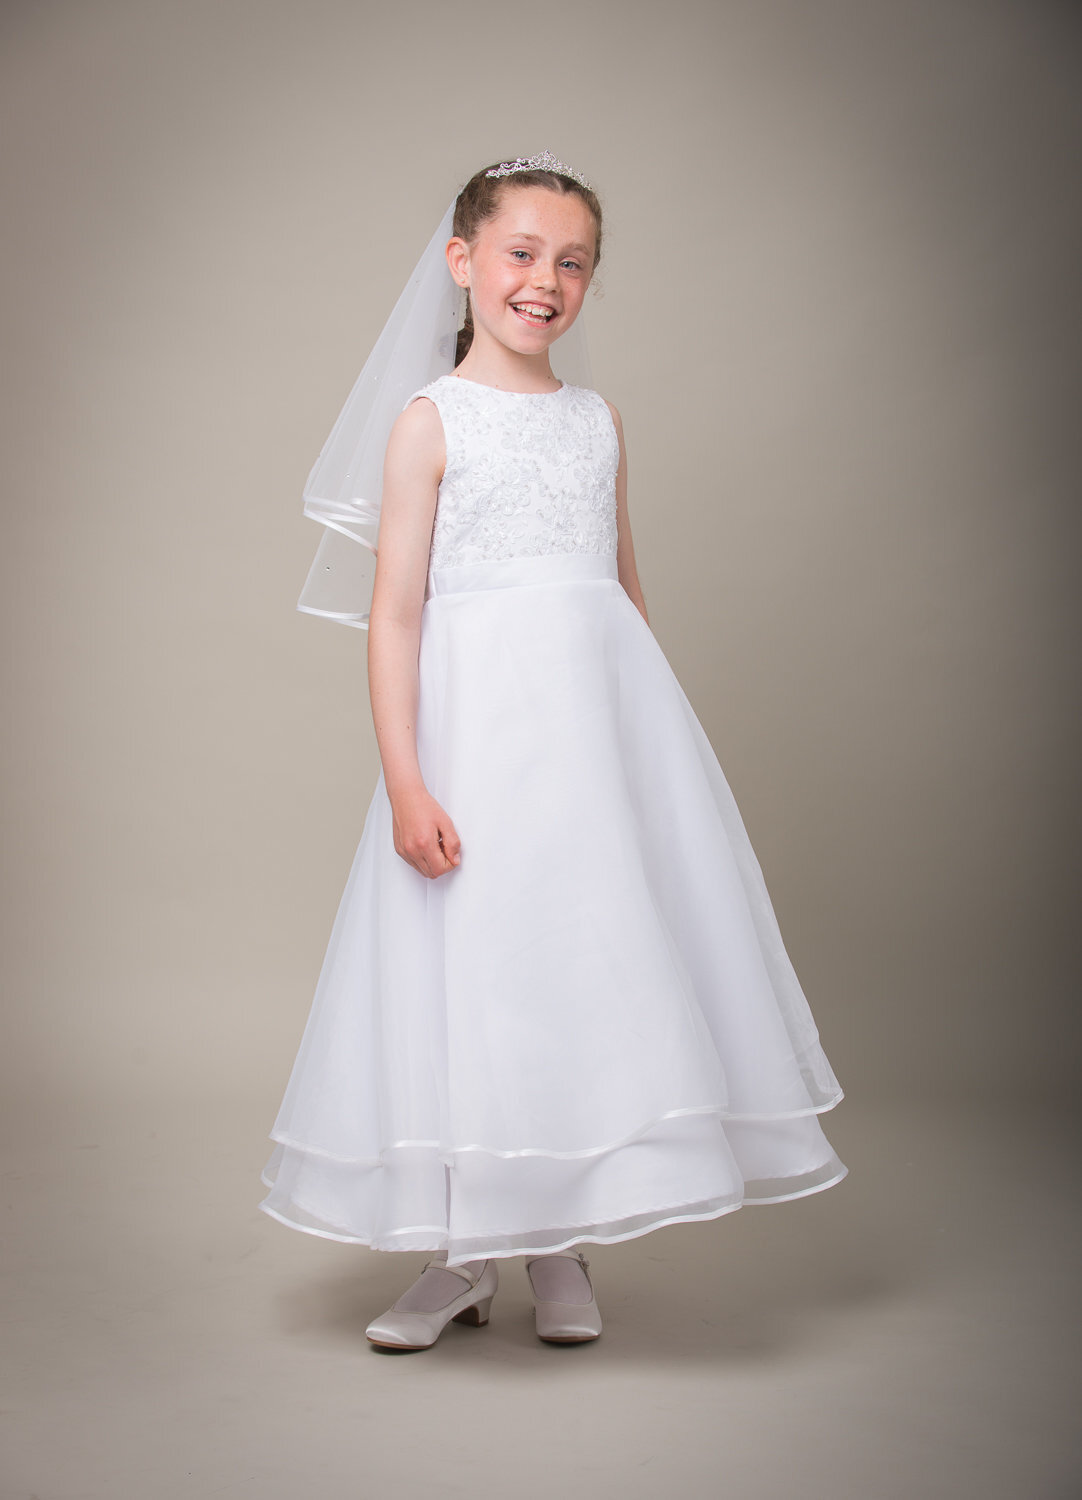 studio portrait of a girl smiling wearing white communion dress